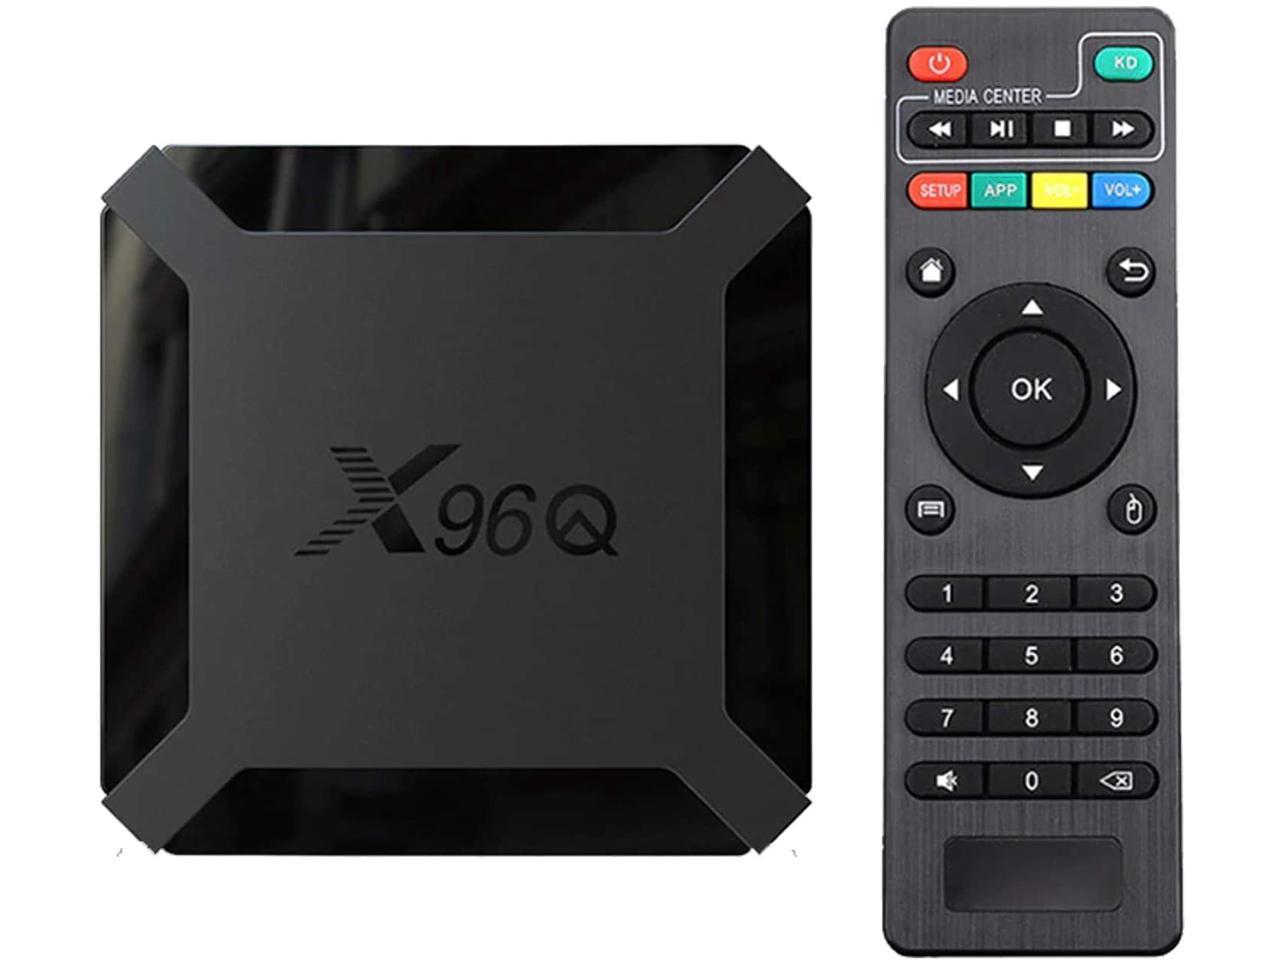 Leelbox Android 10.0 TV Box,X96 Mini 2020 Upgraded Version